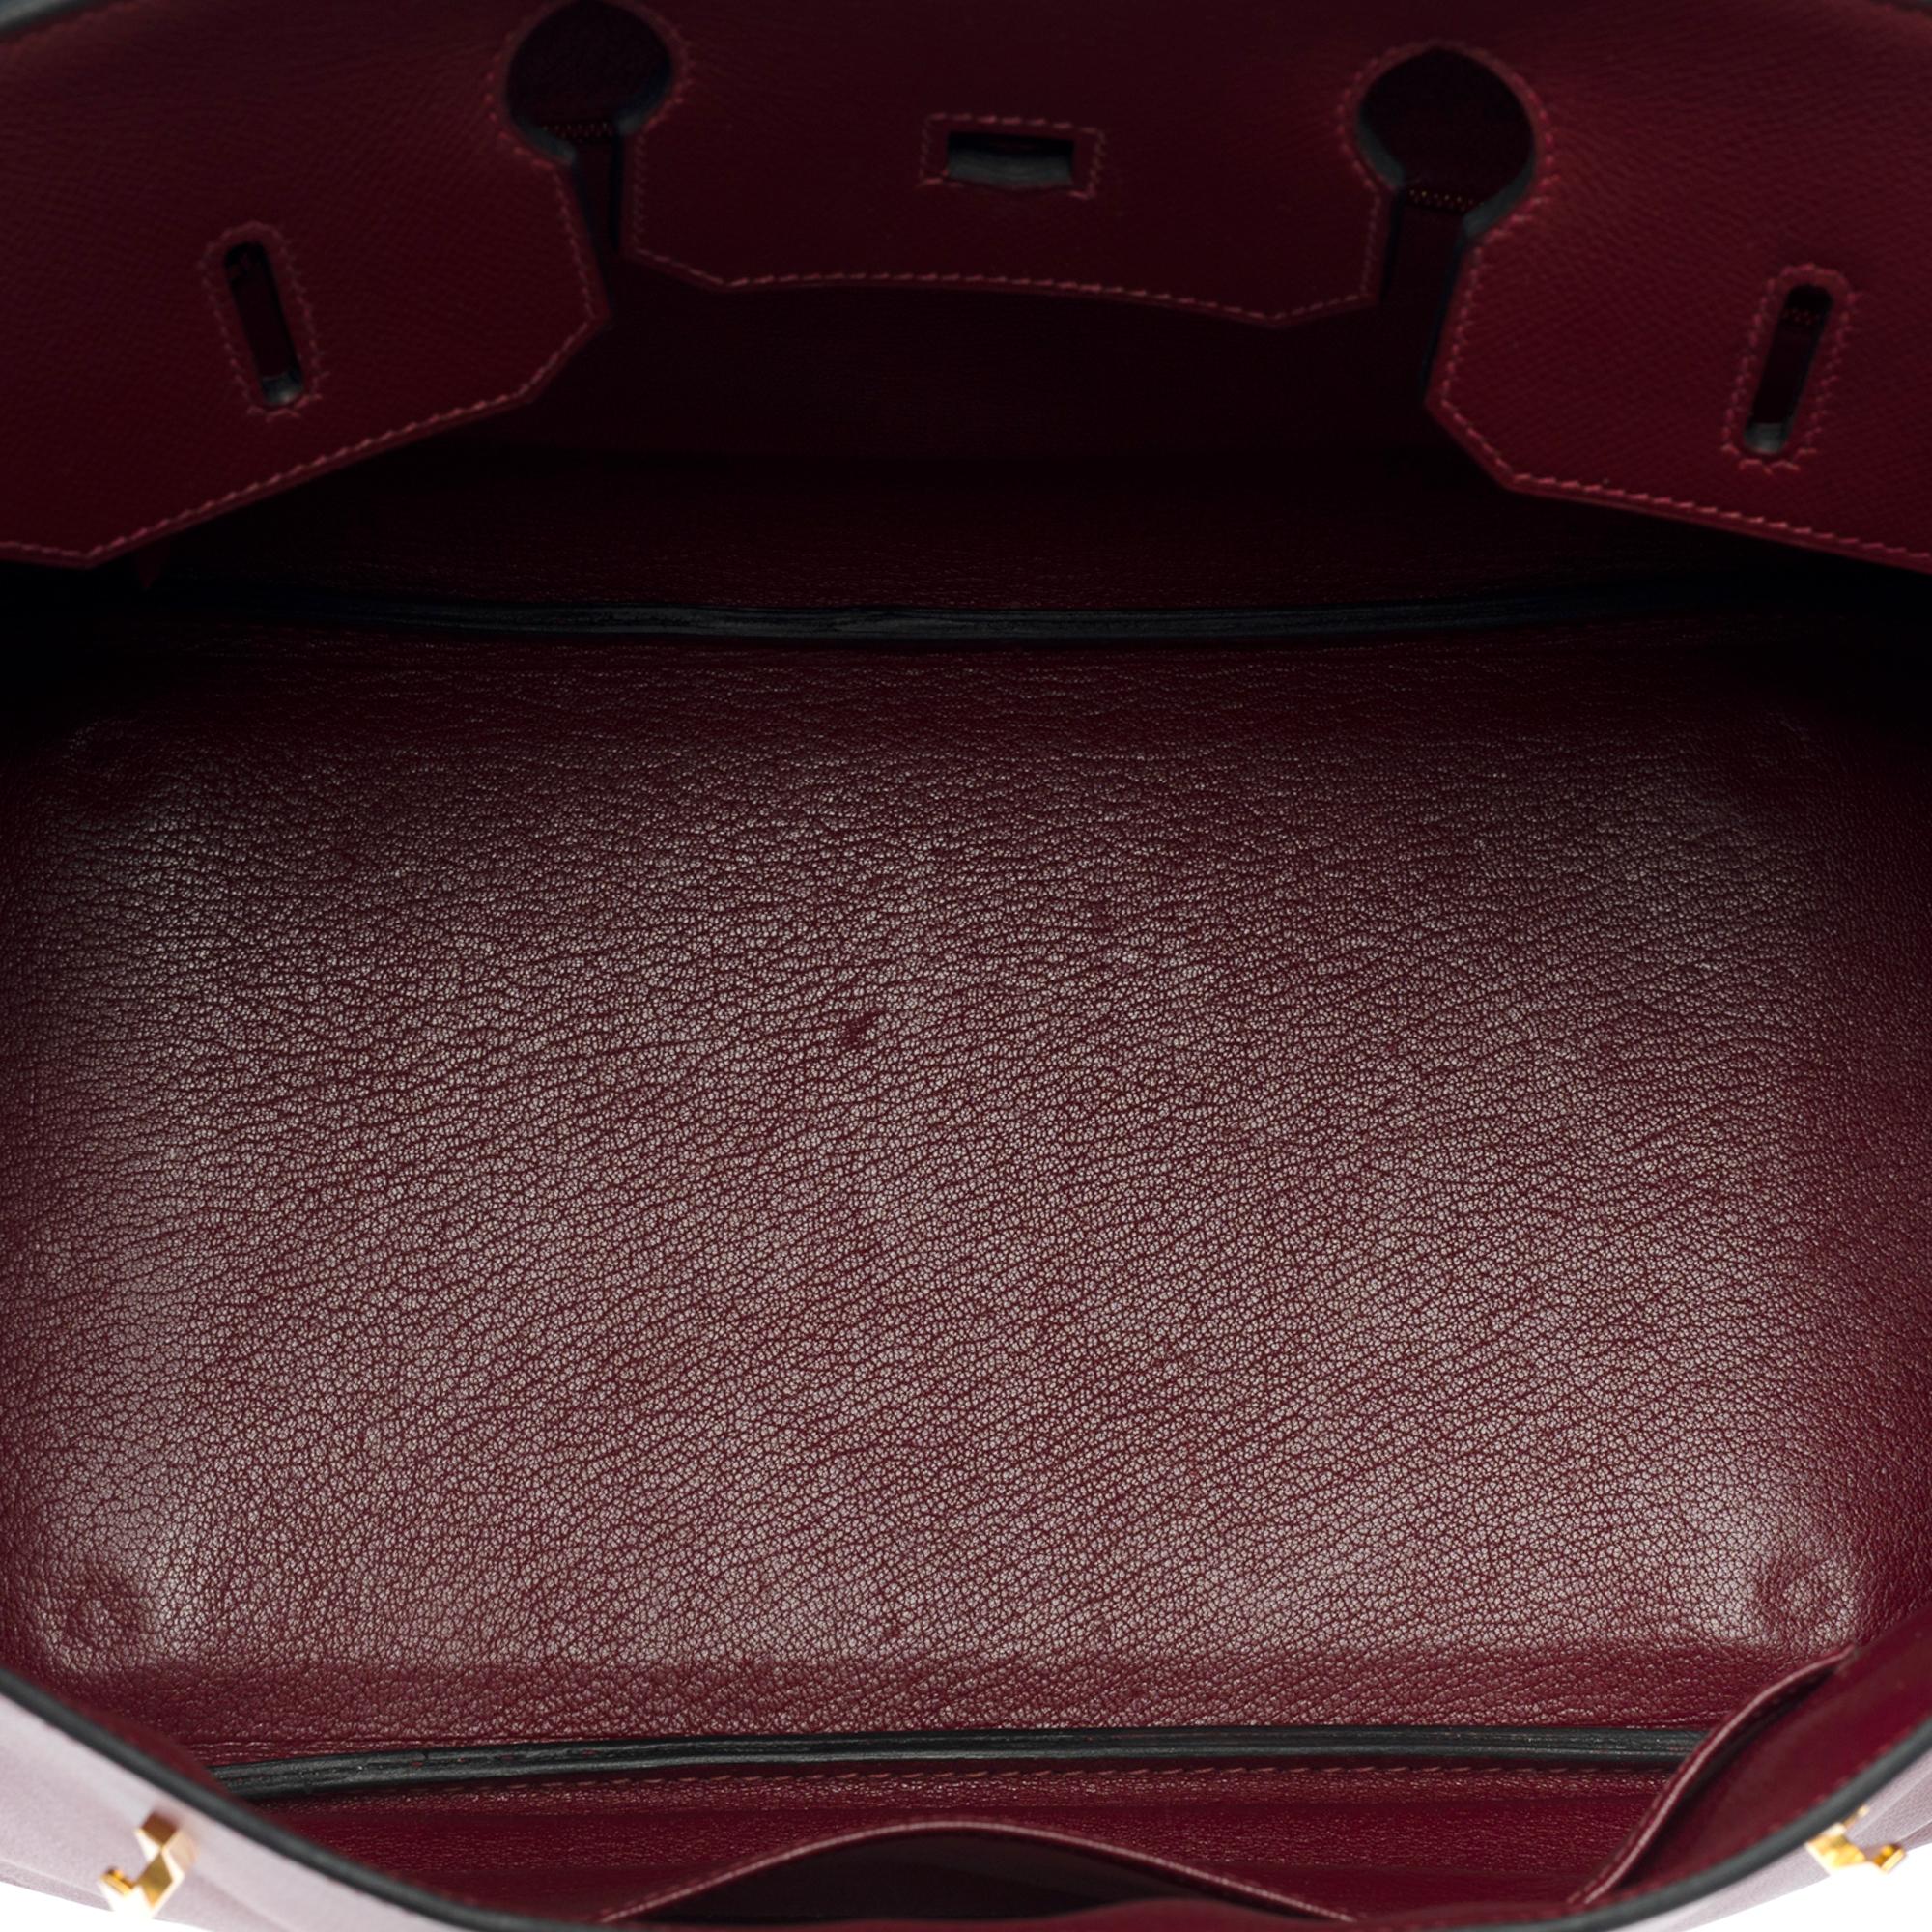 Stunning Hermès Birkin 35 handbag in Rouge H (Burgundy) epsom leather, GHW 3